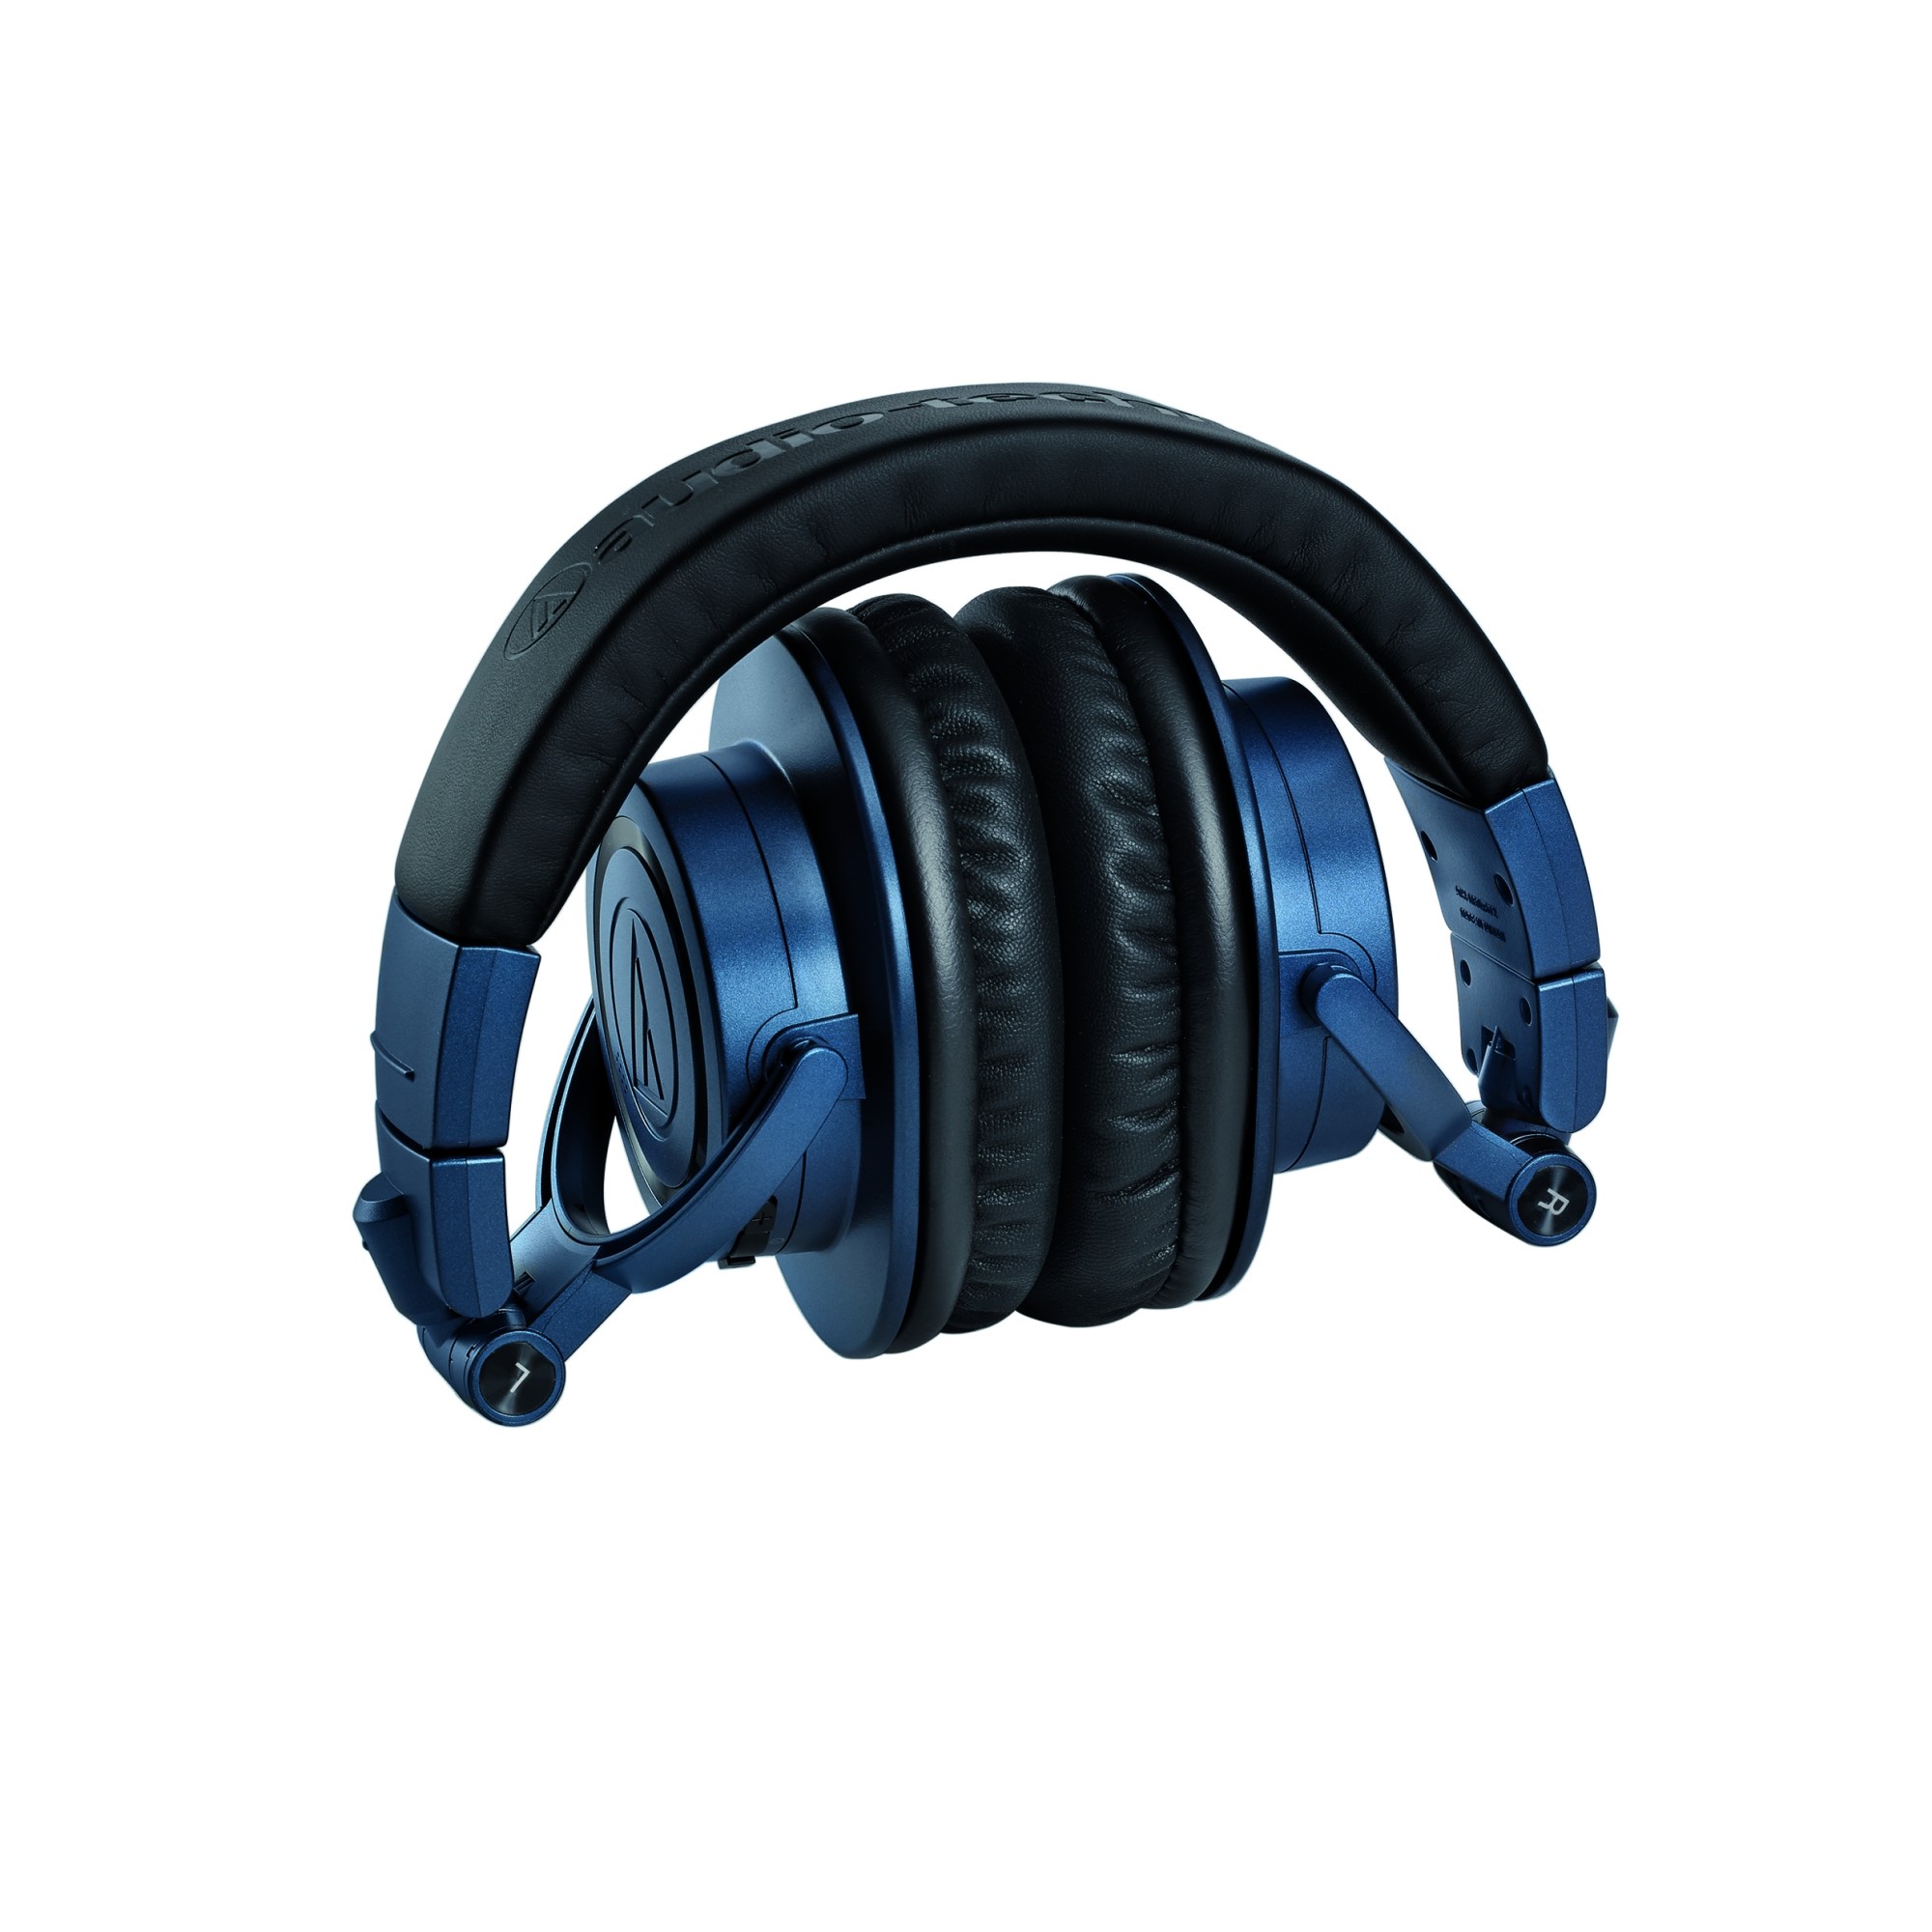 Audio Technica ATH M50x Studio Headphones (Limited Edition Ice